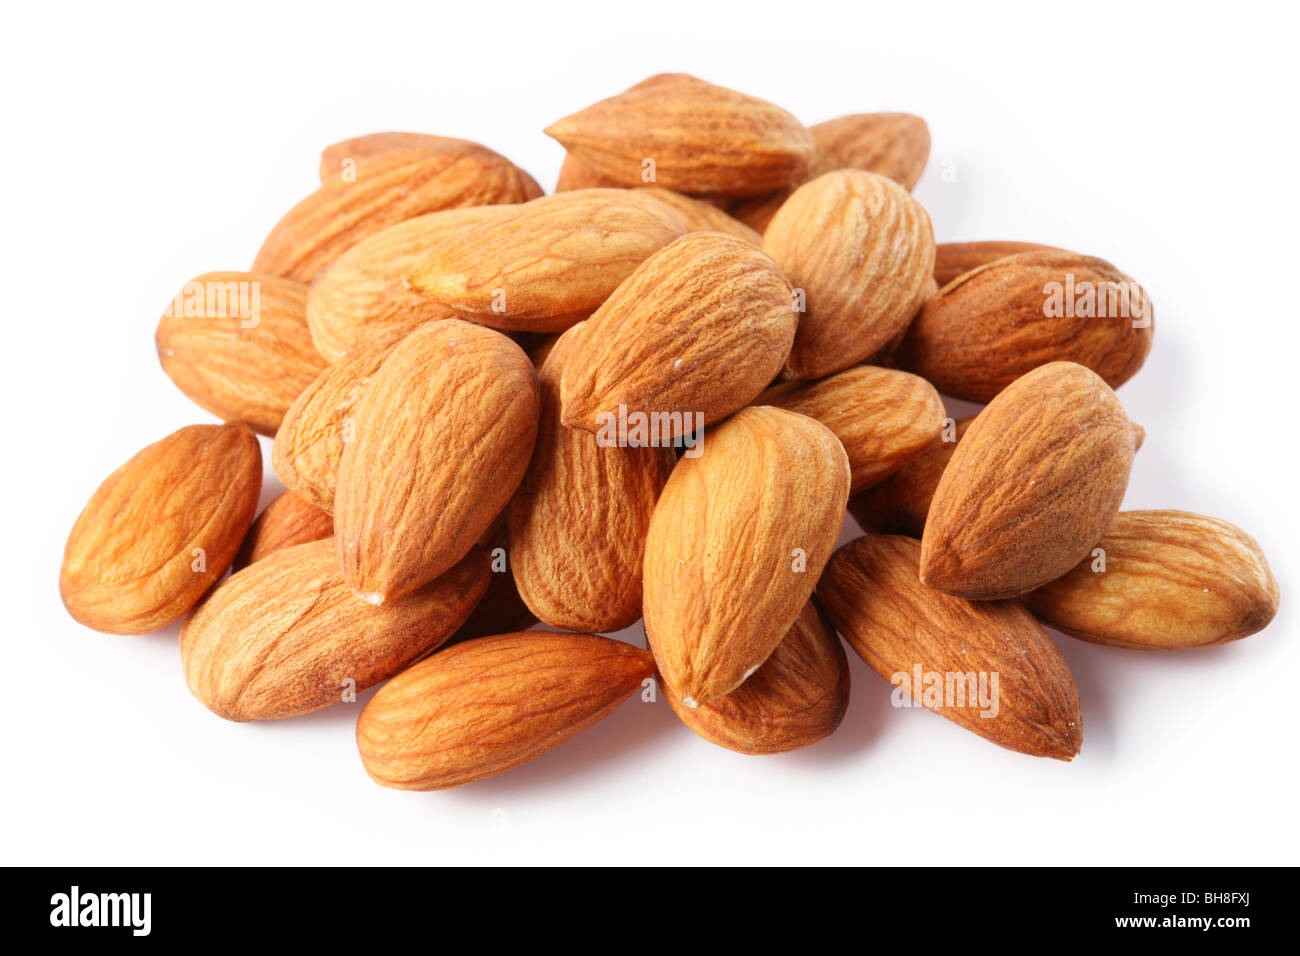 almonds on a white background Stock Photo